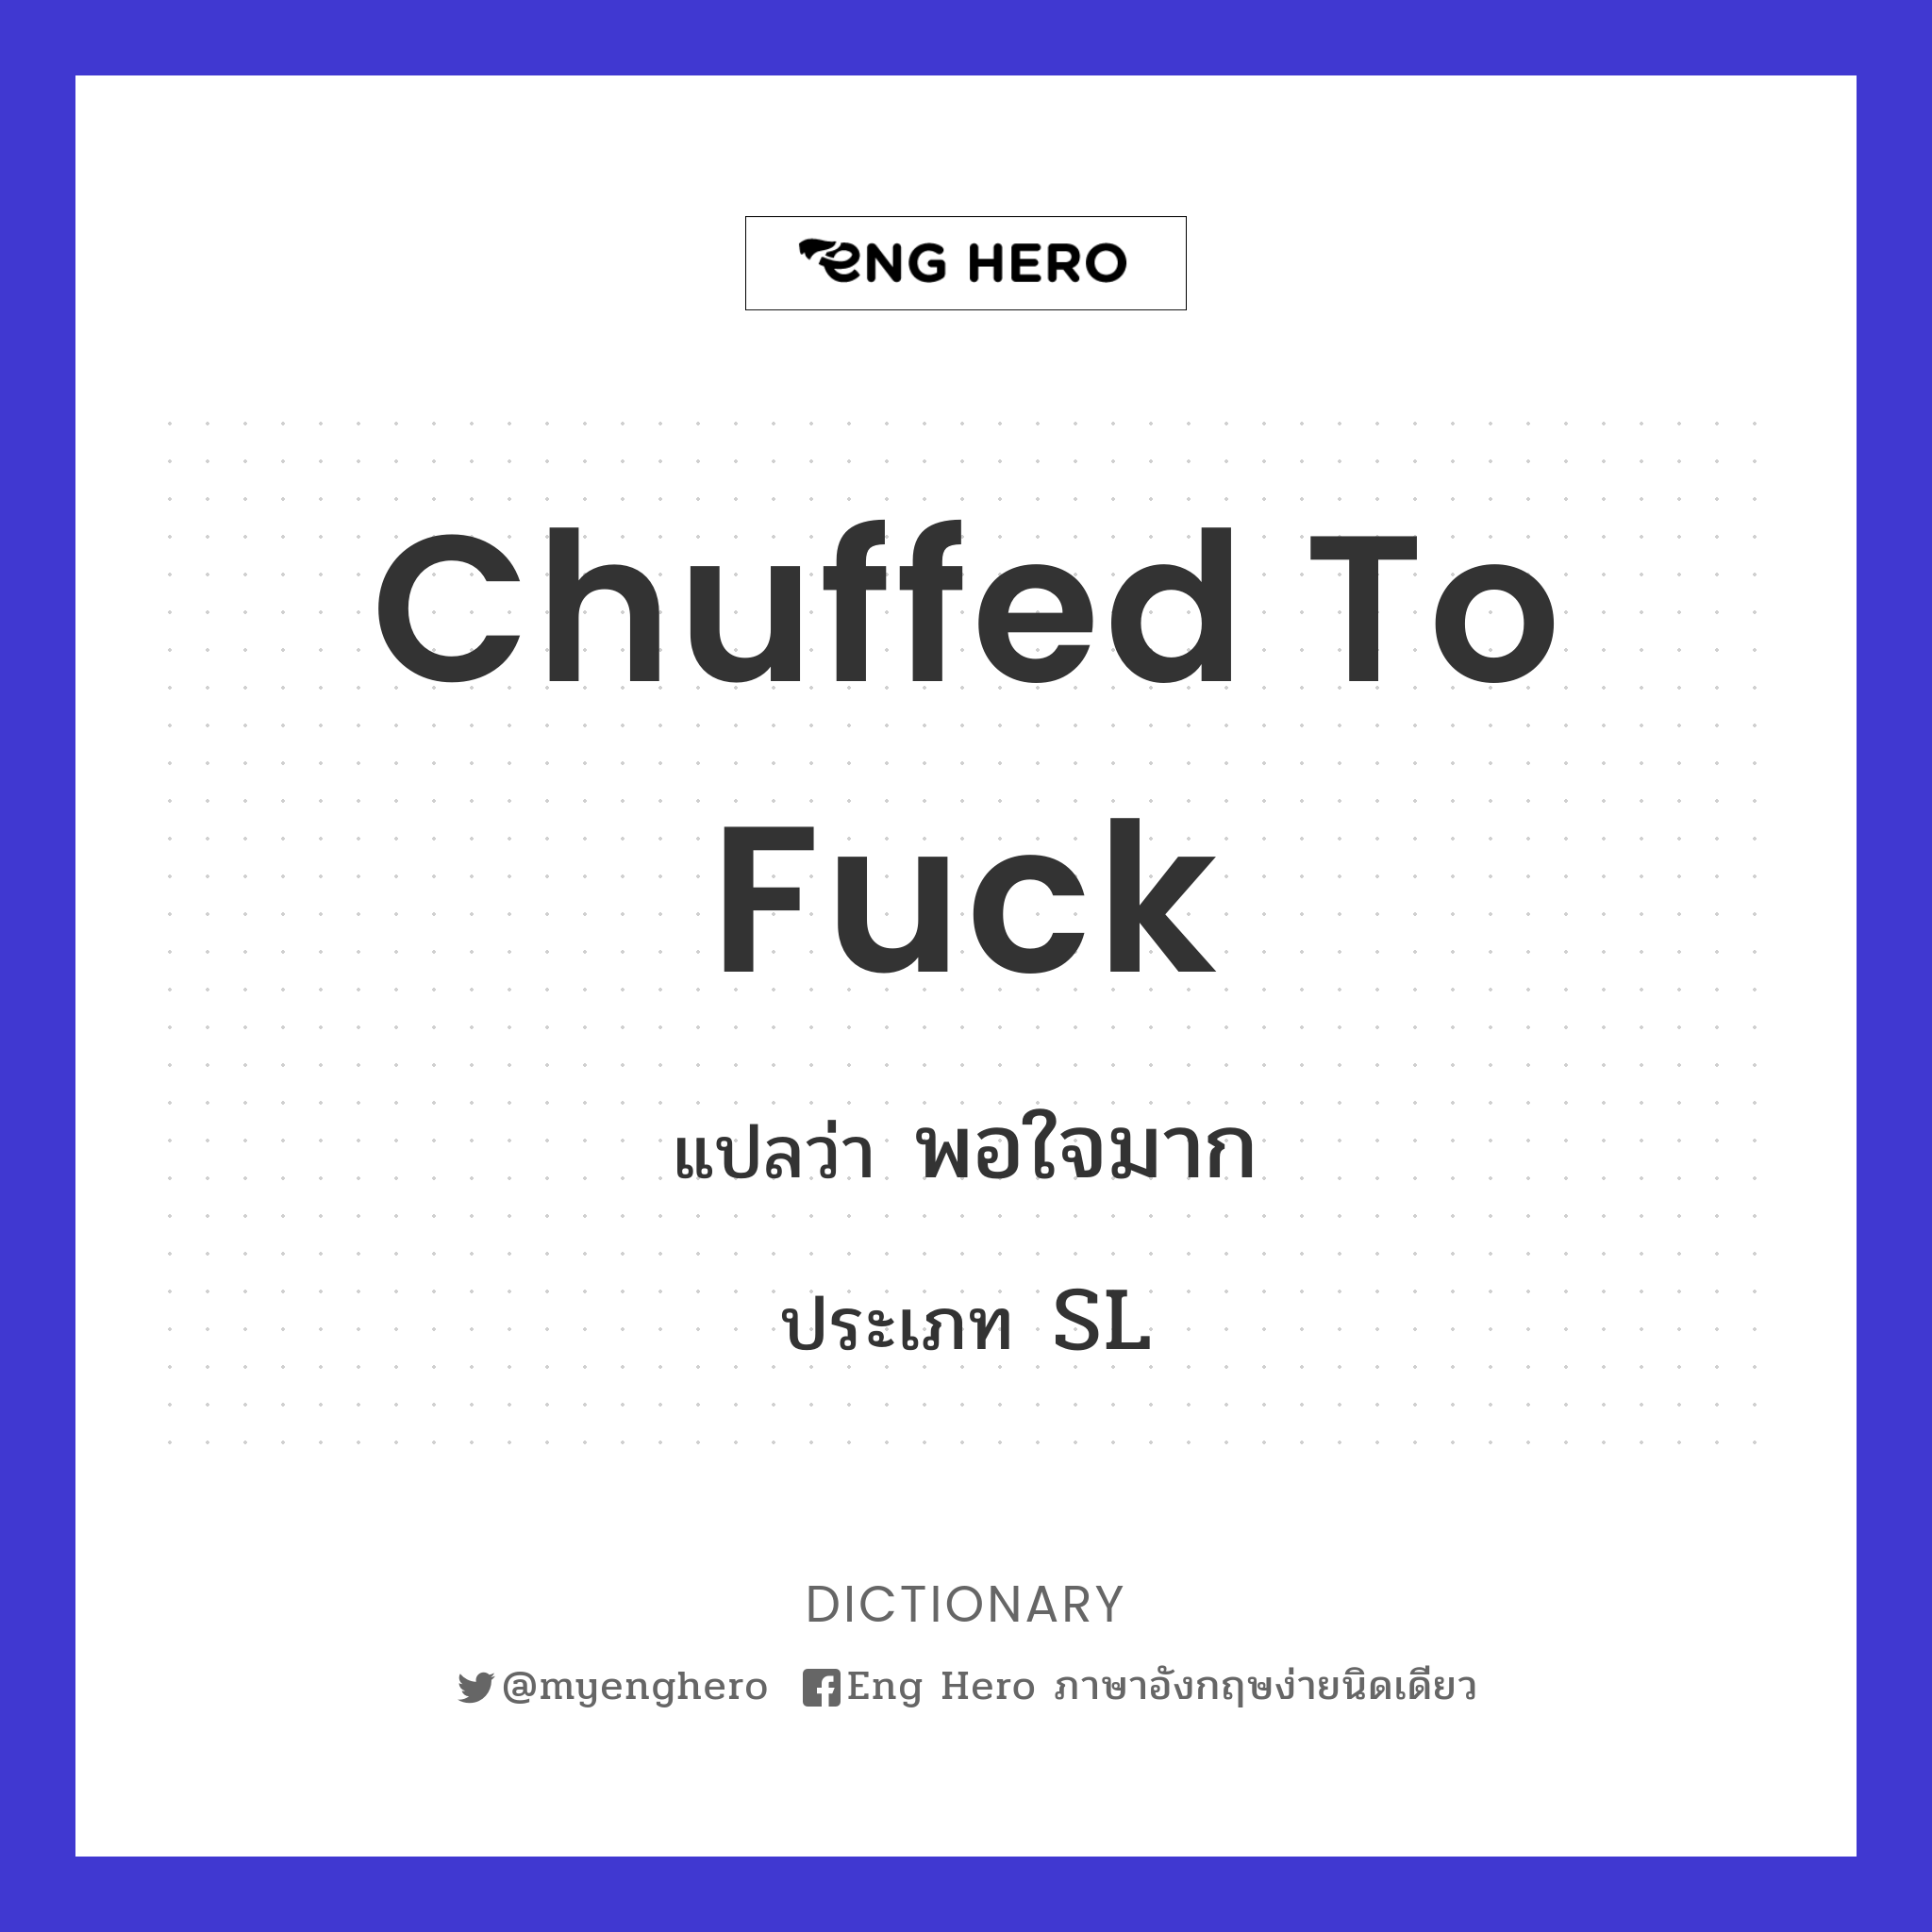 chuffed to fuck